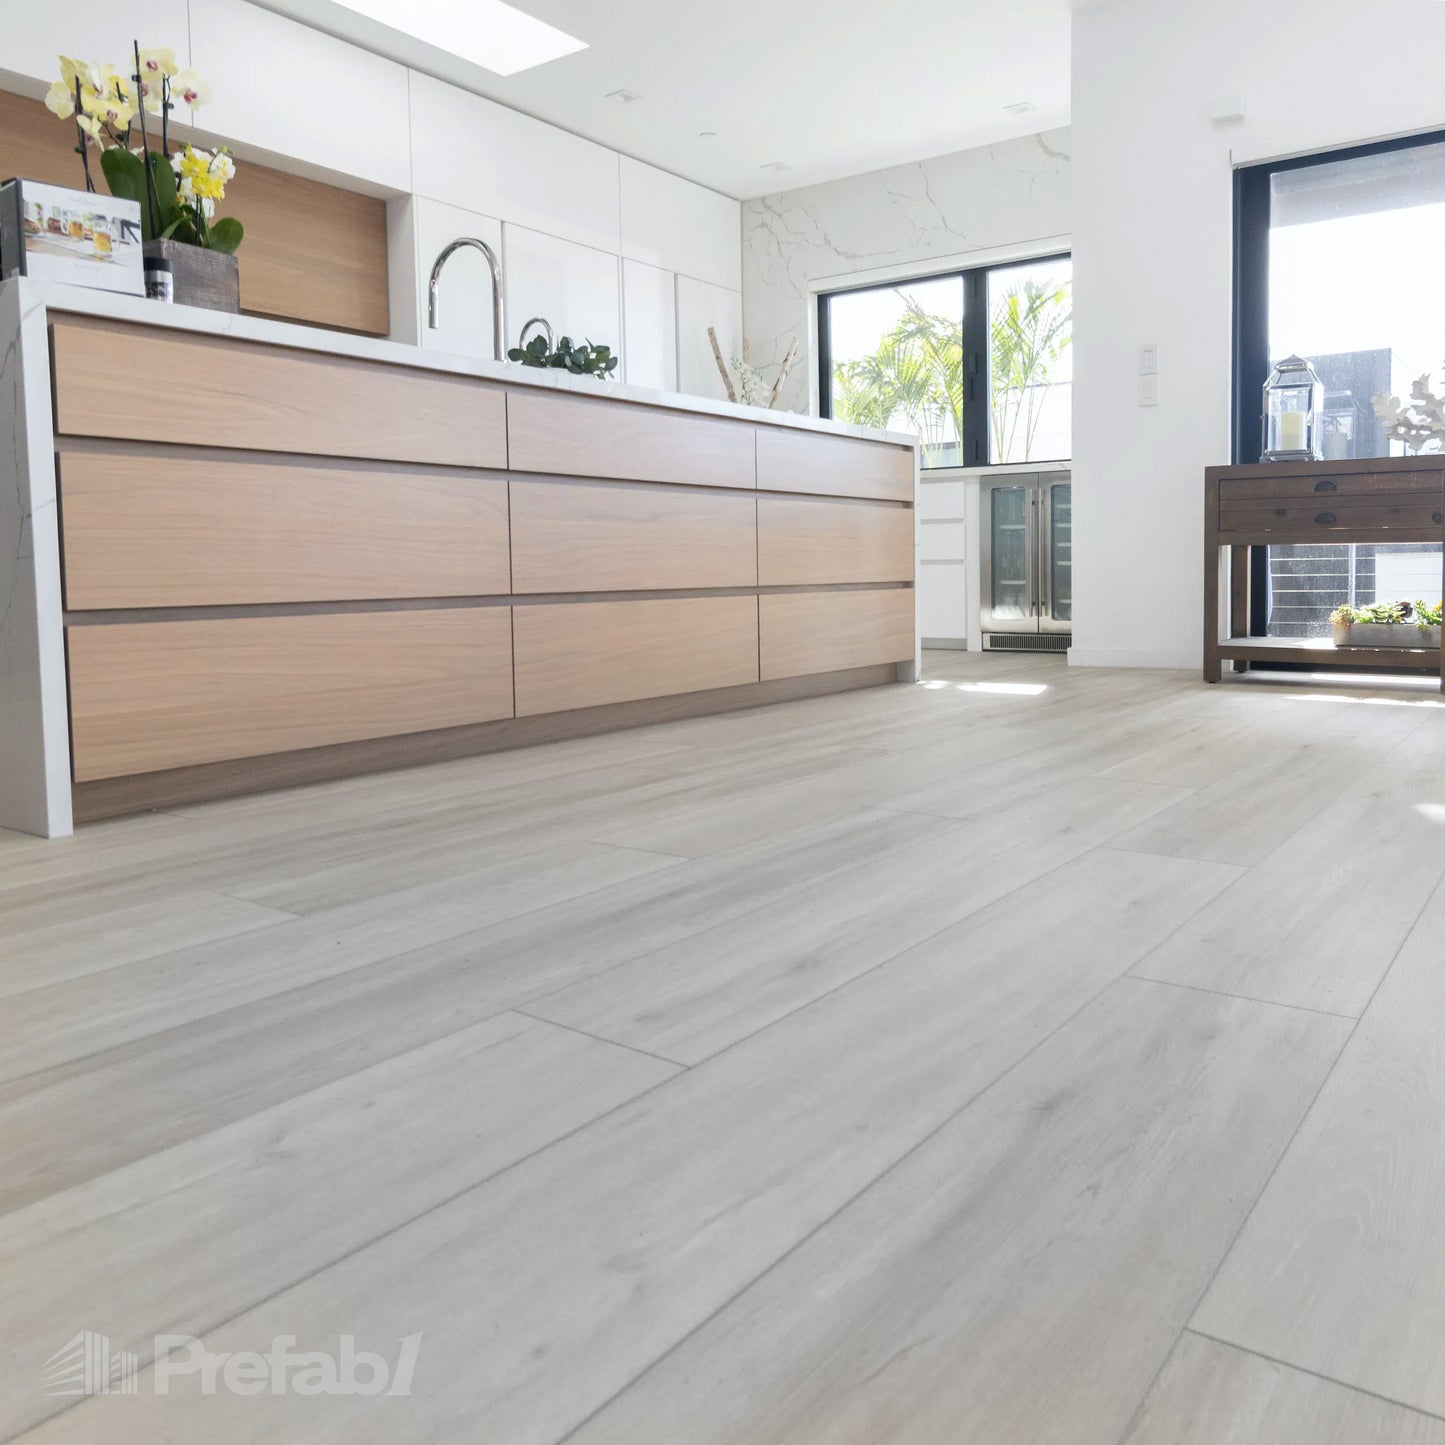 Prefab1® Wood Flooring Panel - Saltwater Oak